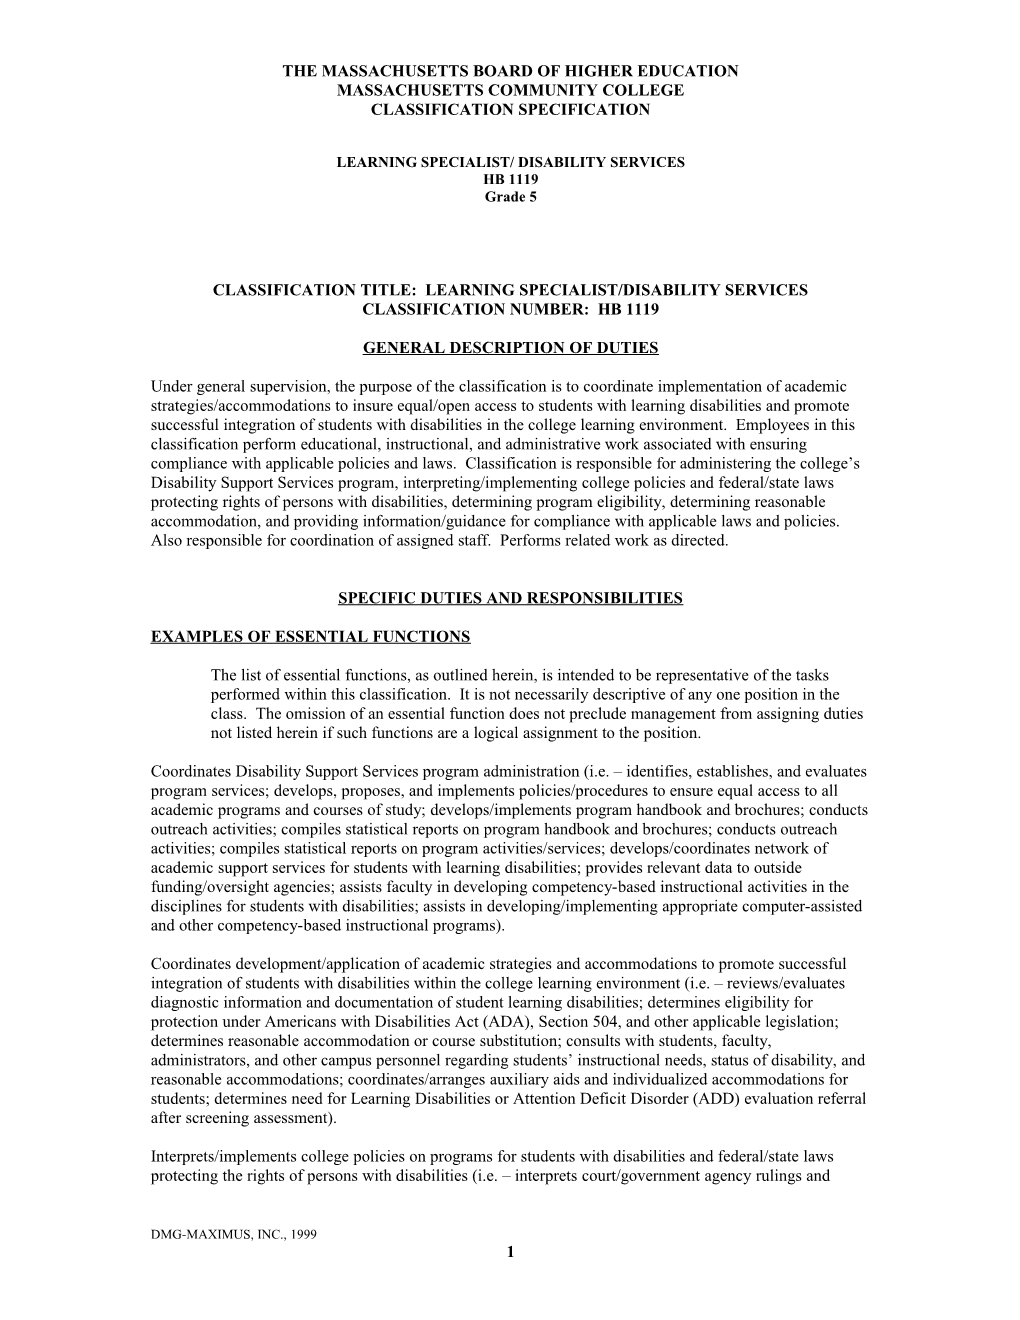 Classification Title: Academic Coordinator s4